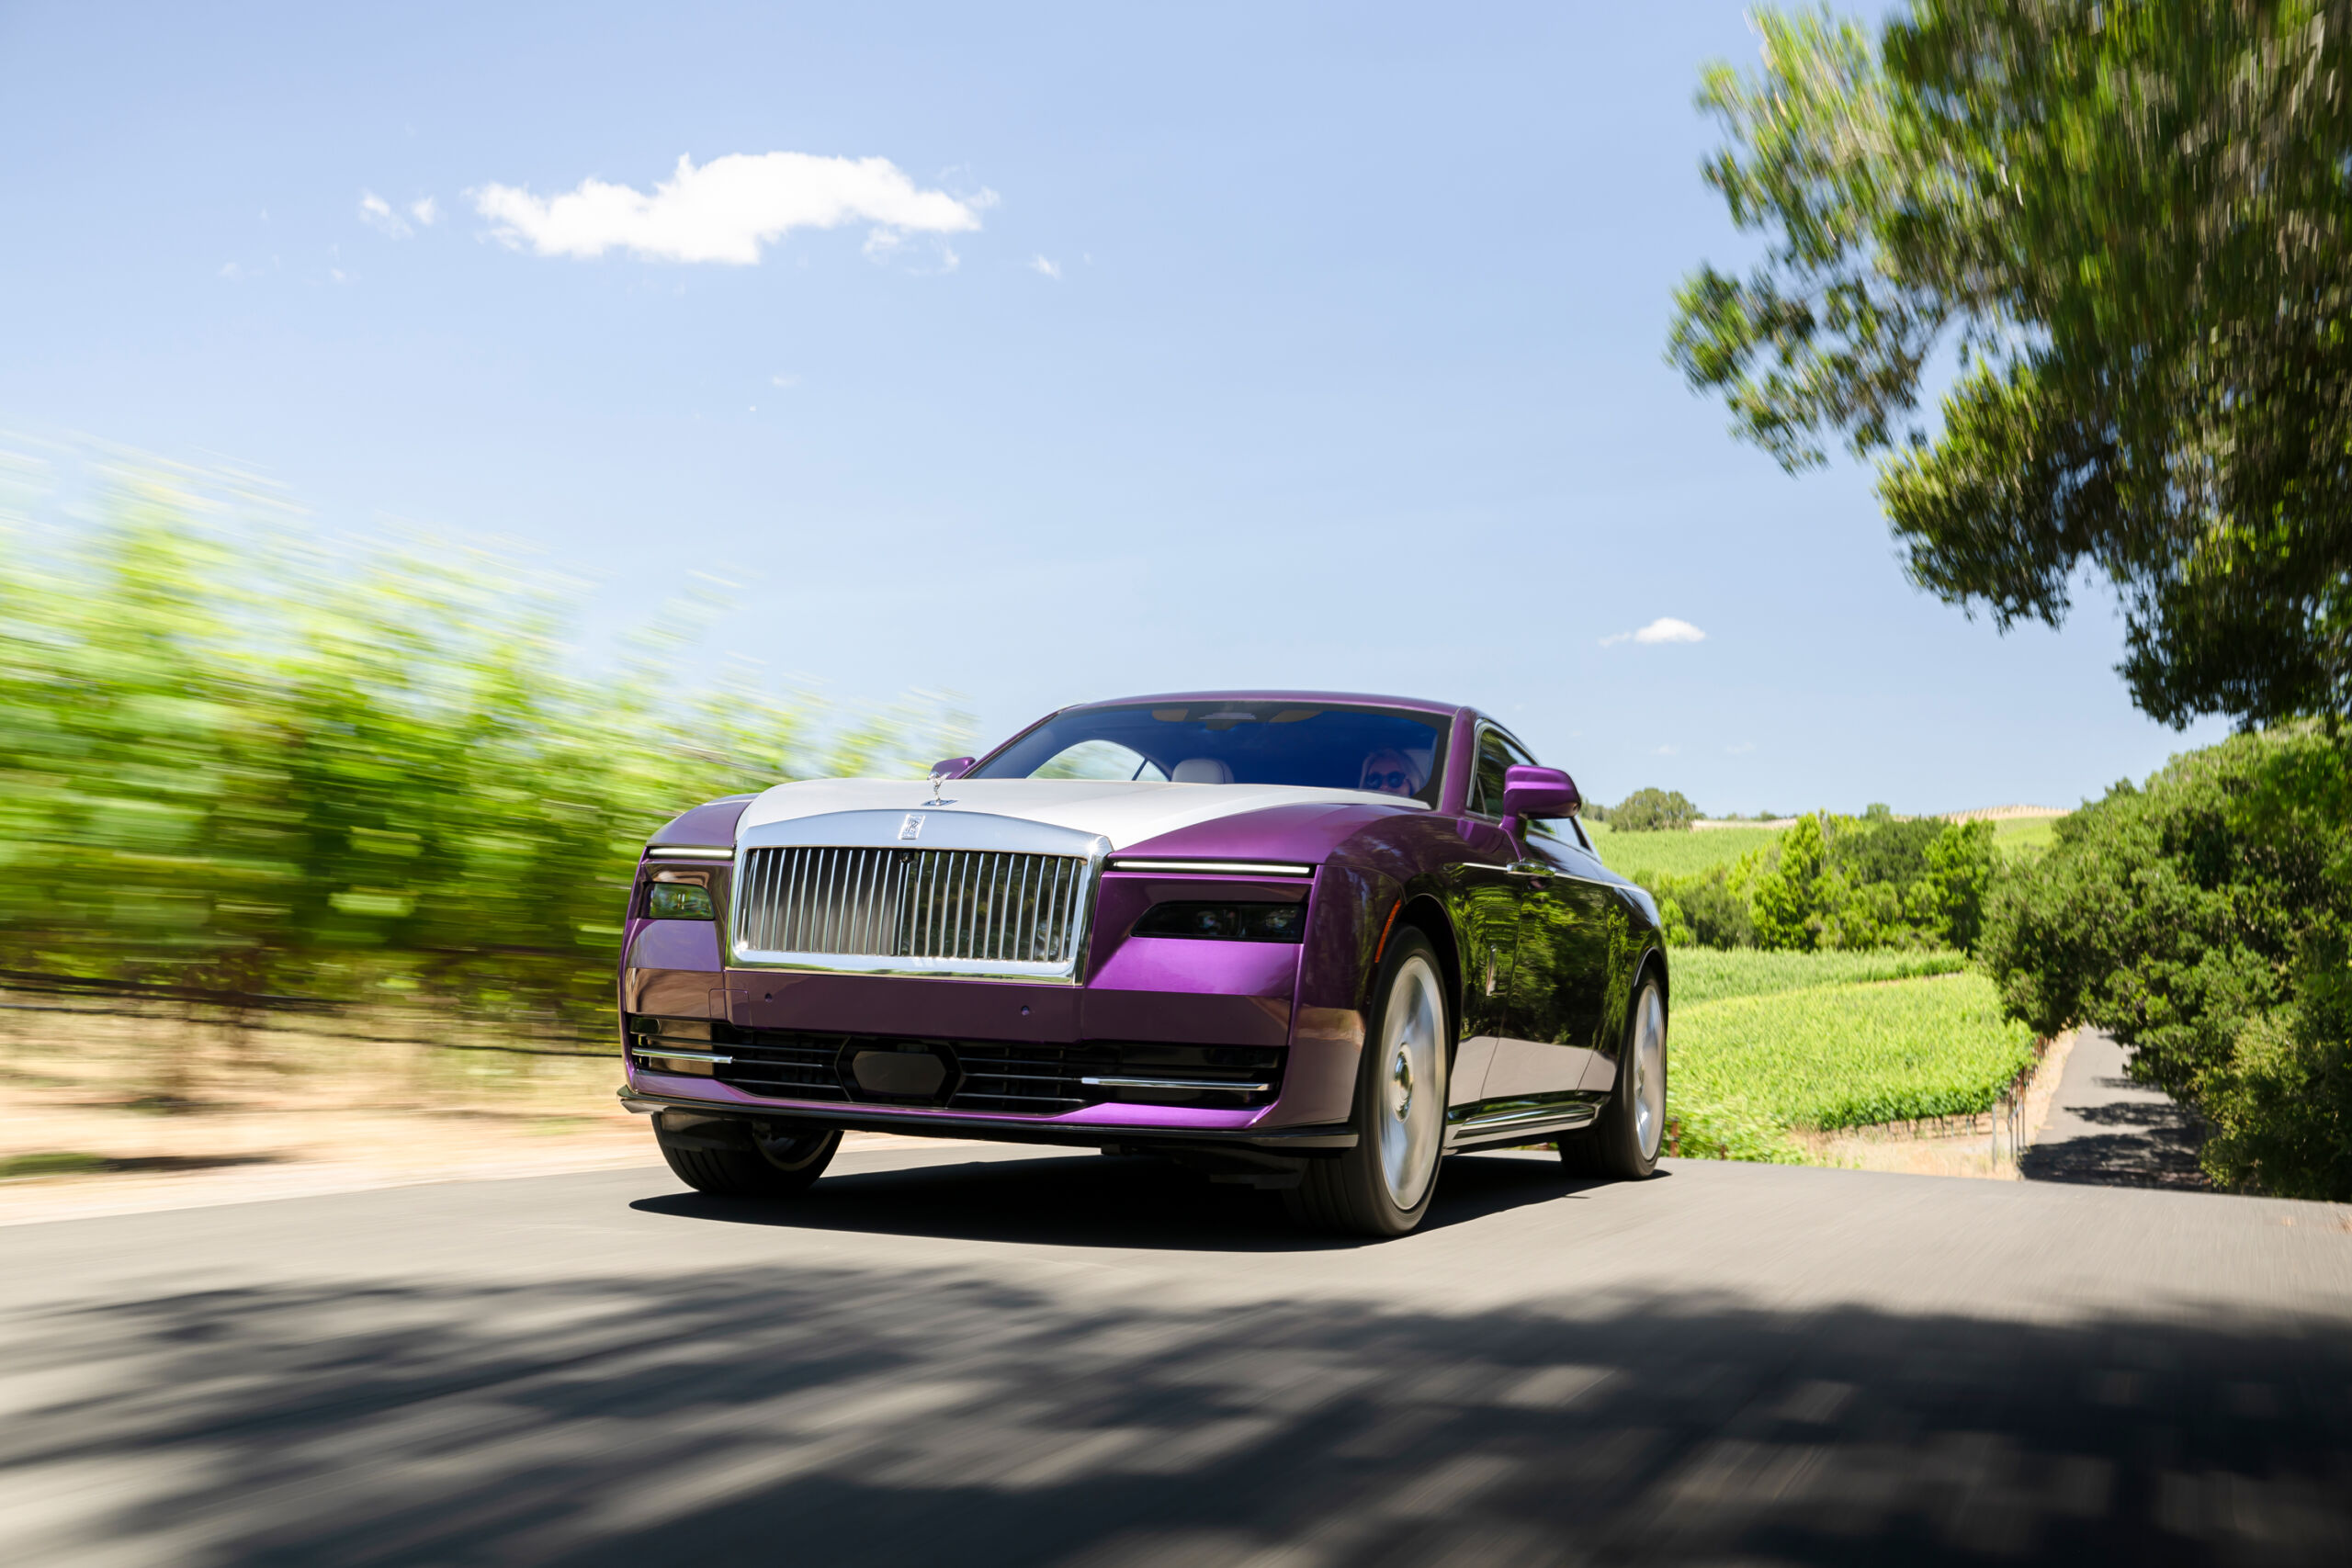 2022 Rolls Royce Phantom Price Engine Mileage Top Speed  060 mph   21Motoring  Automotive Reviews